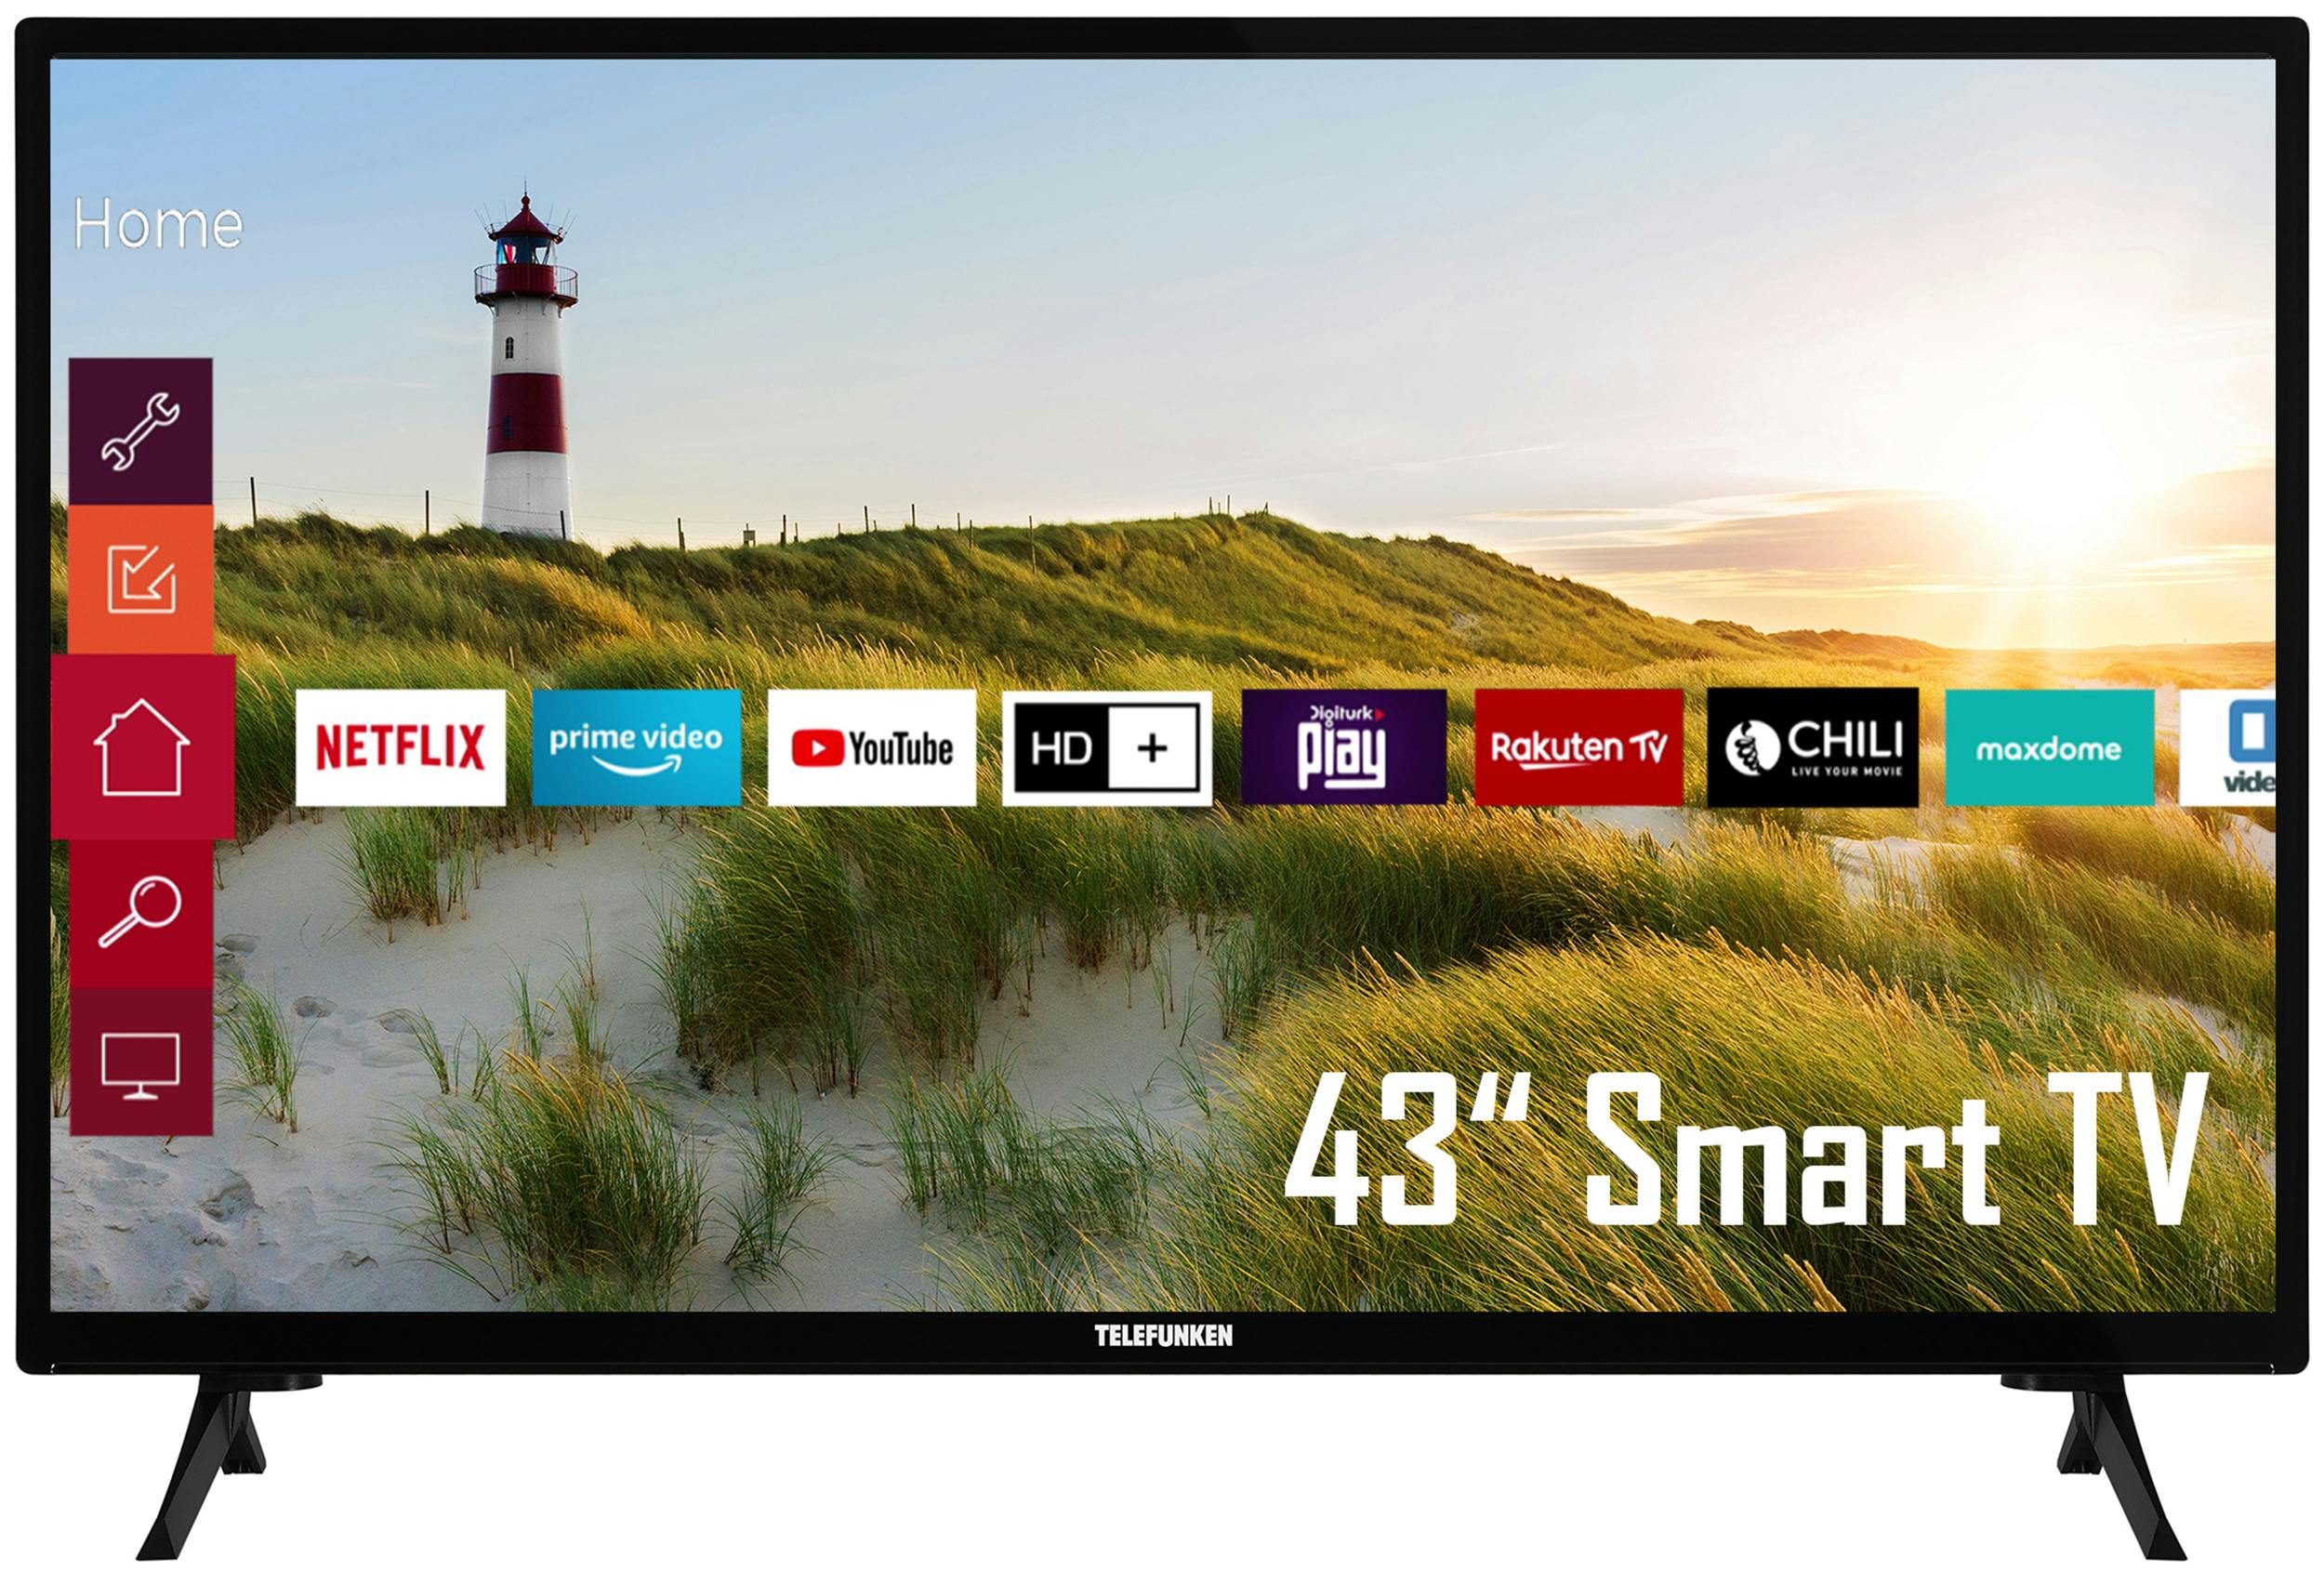 Telefunken XF43K550 TV inkl. HD+ HD, | Marktplatz HDR, - METRO 6 Triple-Tuner) (Full Monate 43 Zoll Fernseher/Smart